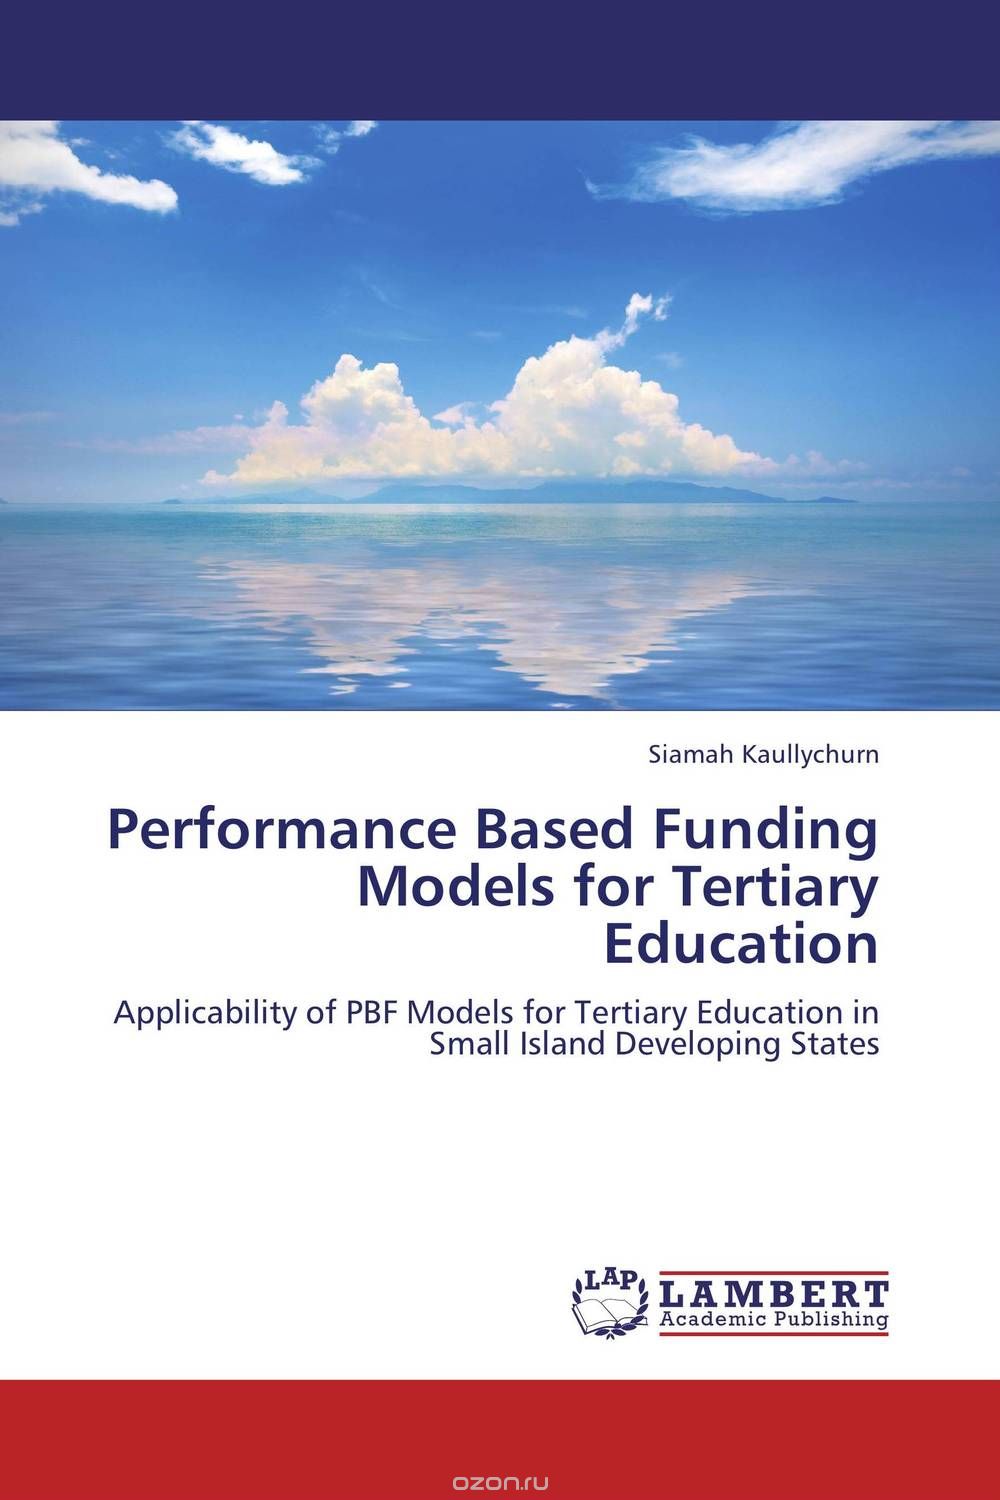 Скачать книгу "Performance Based Funding Models for Tertiary Education"